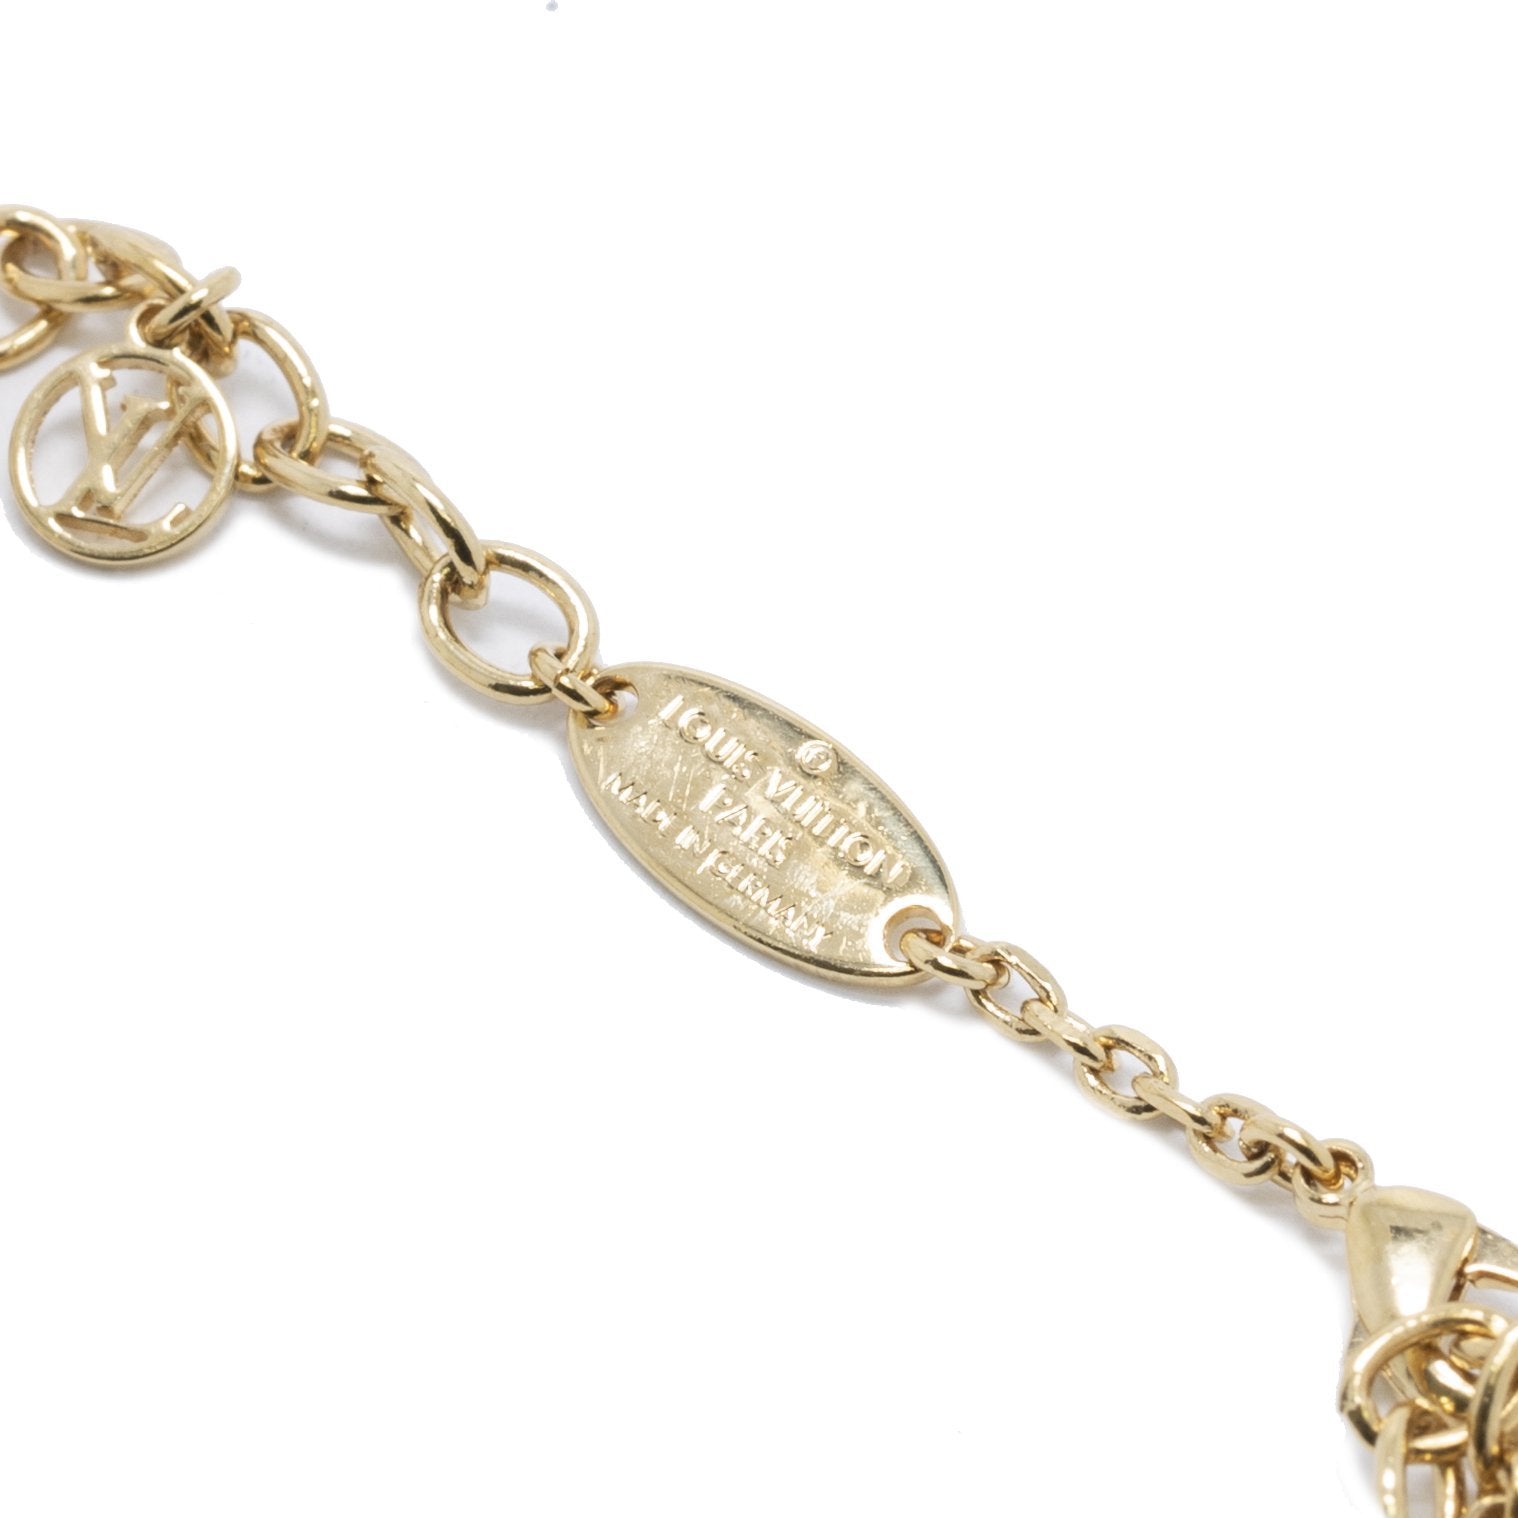 Blooming bracelet Louis Vuitton Gold in Metal - 34153900